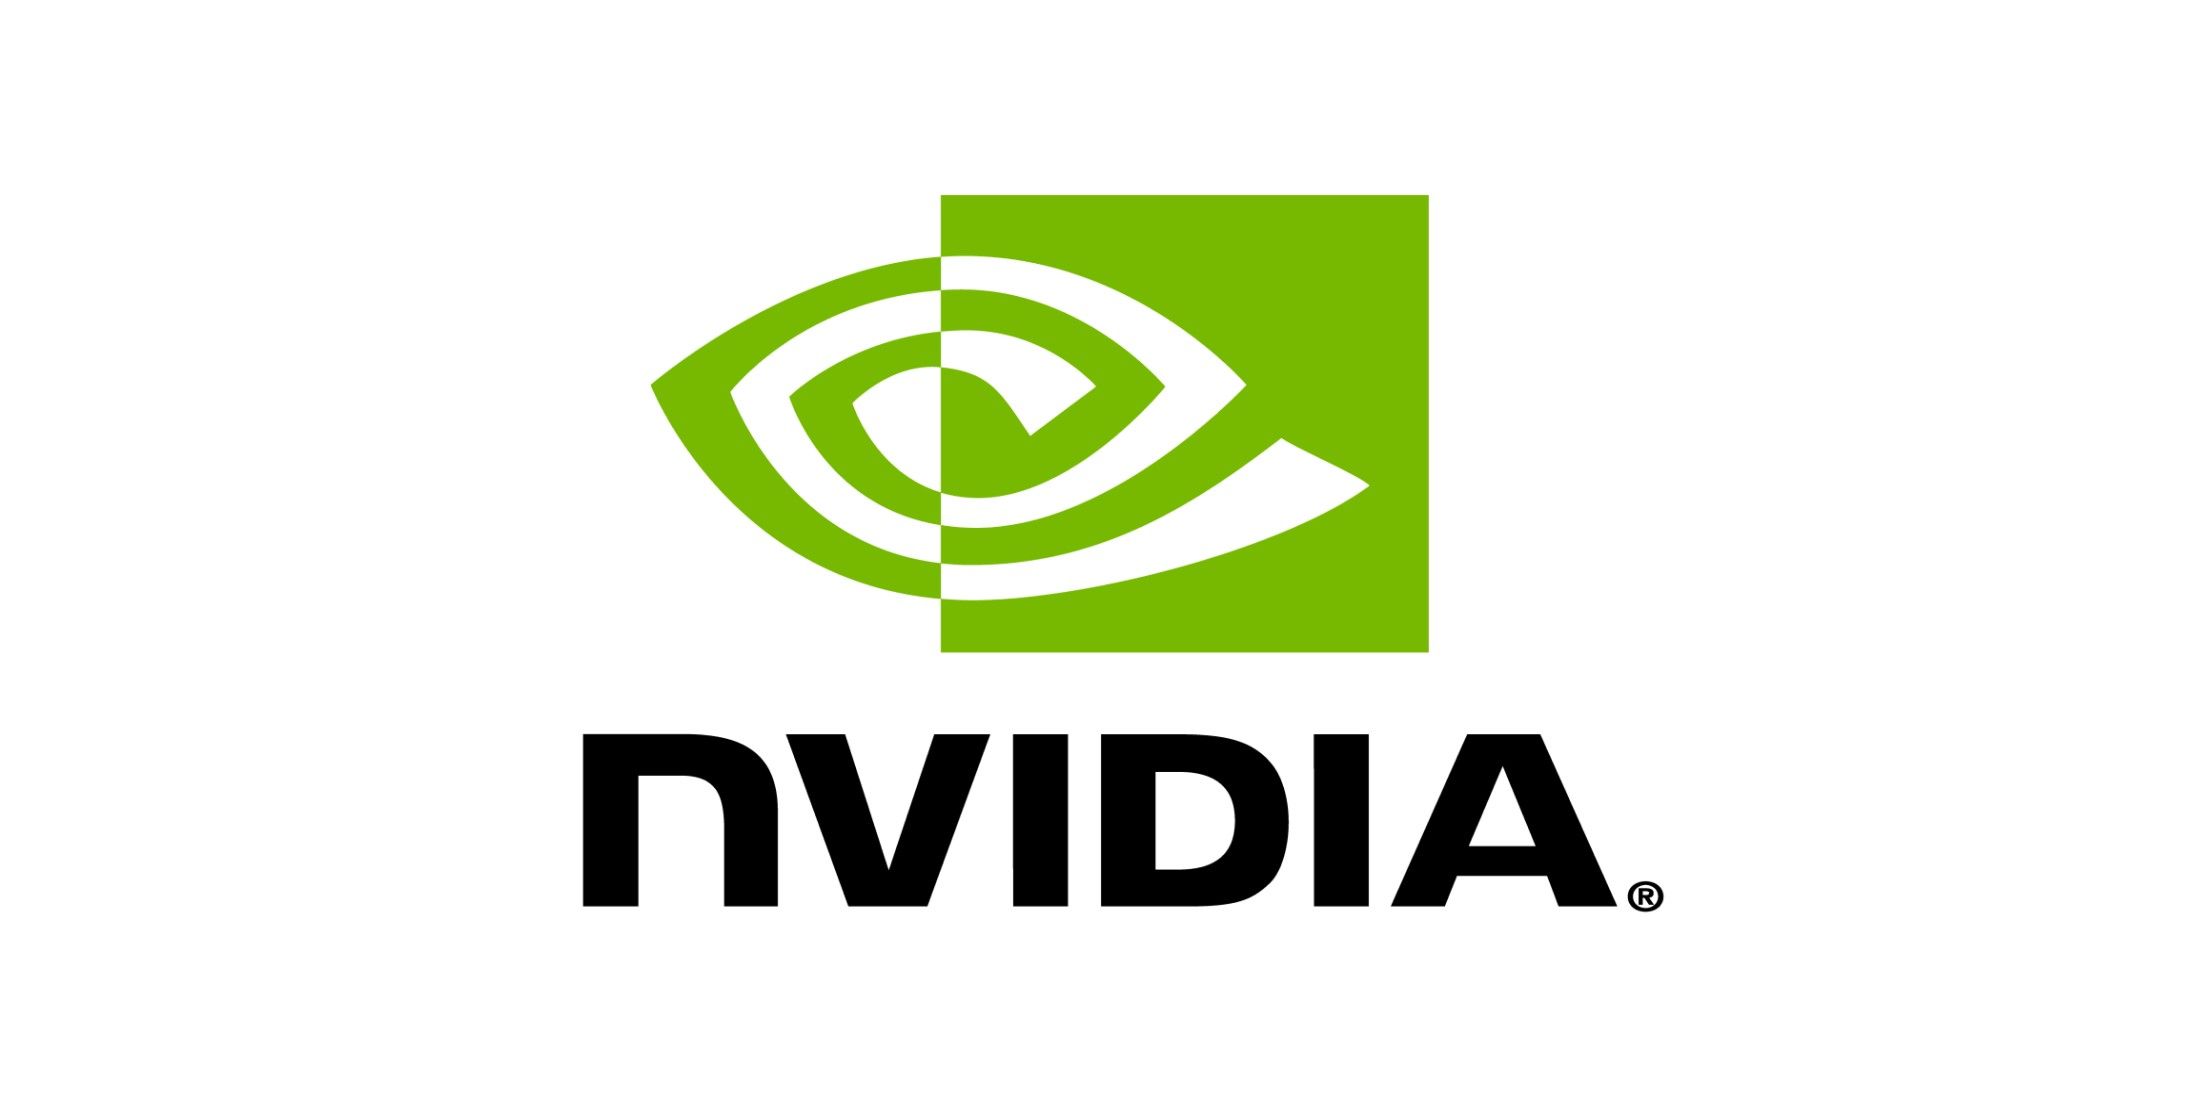 nvidia-logo-rtx-5090-rumored-power-upgrade